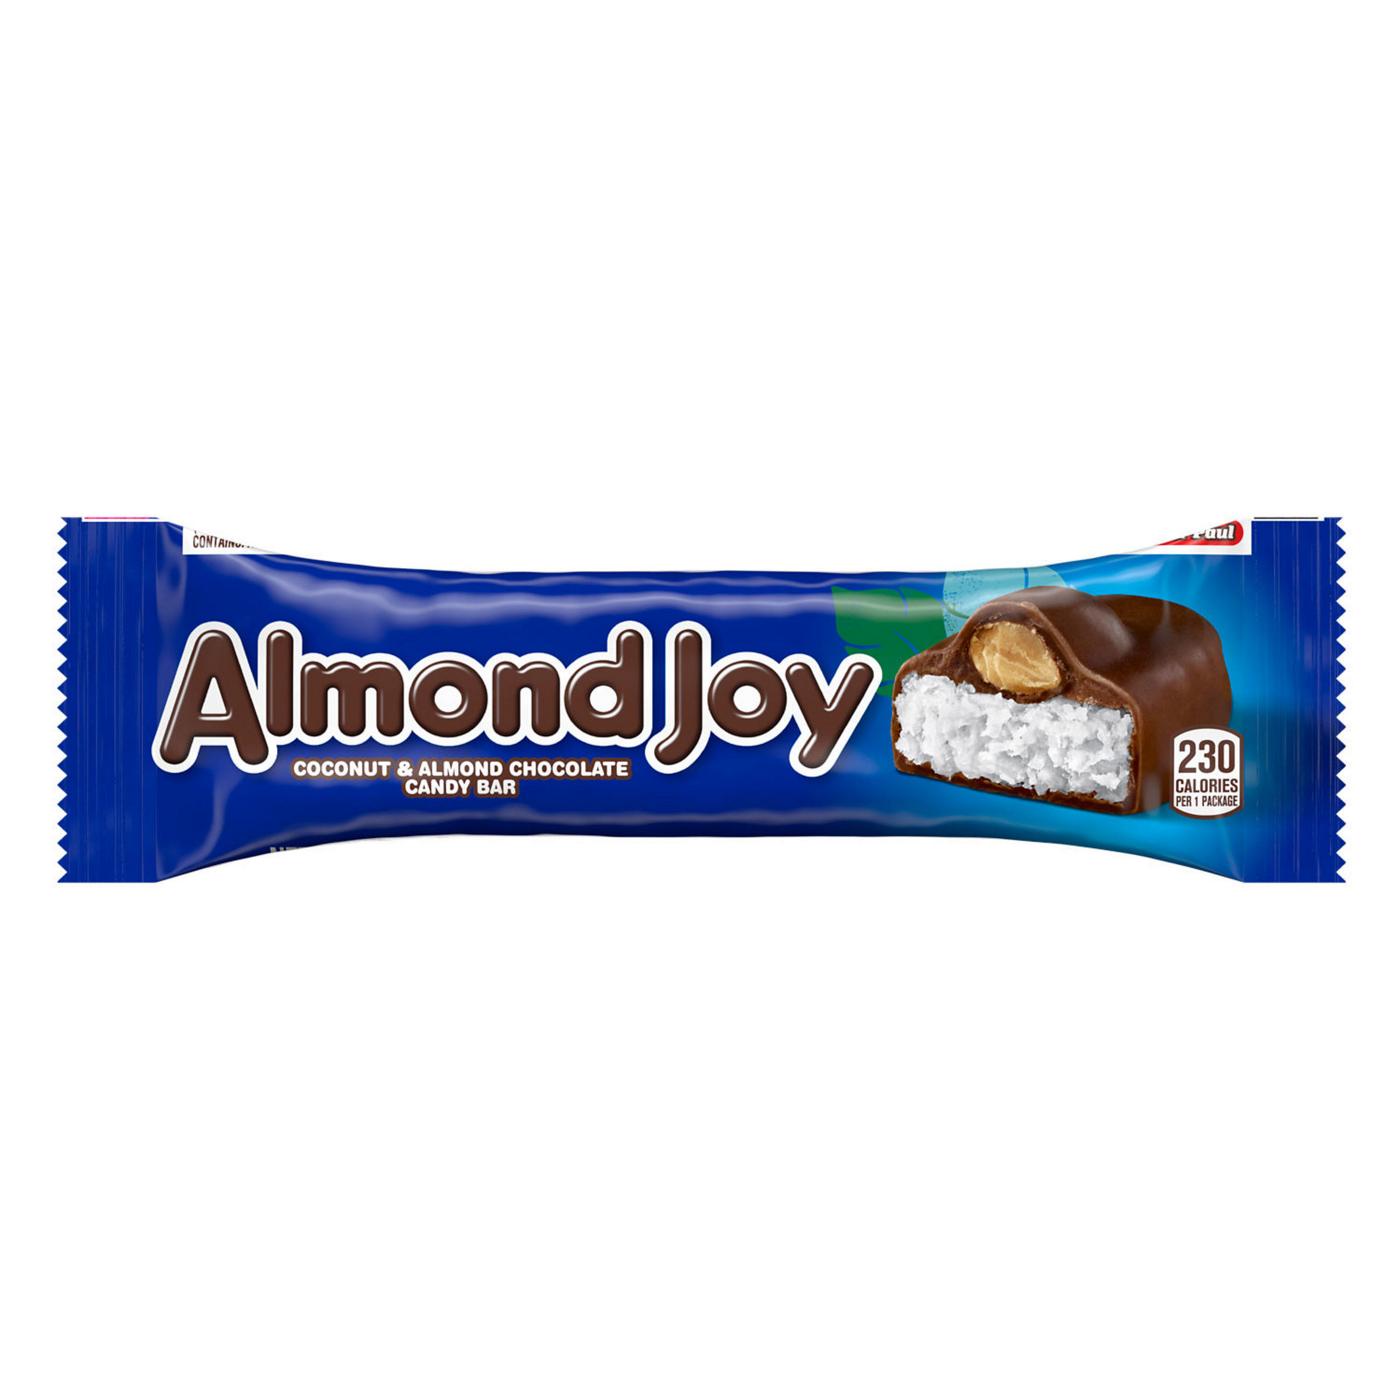 Almond Joy Coconut & Almond Chocolate Candy Bar; image 1 of 7